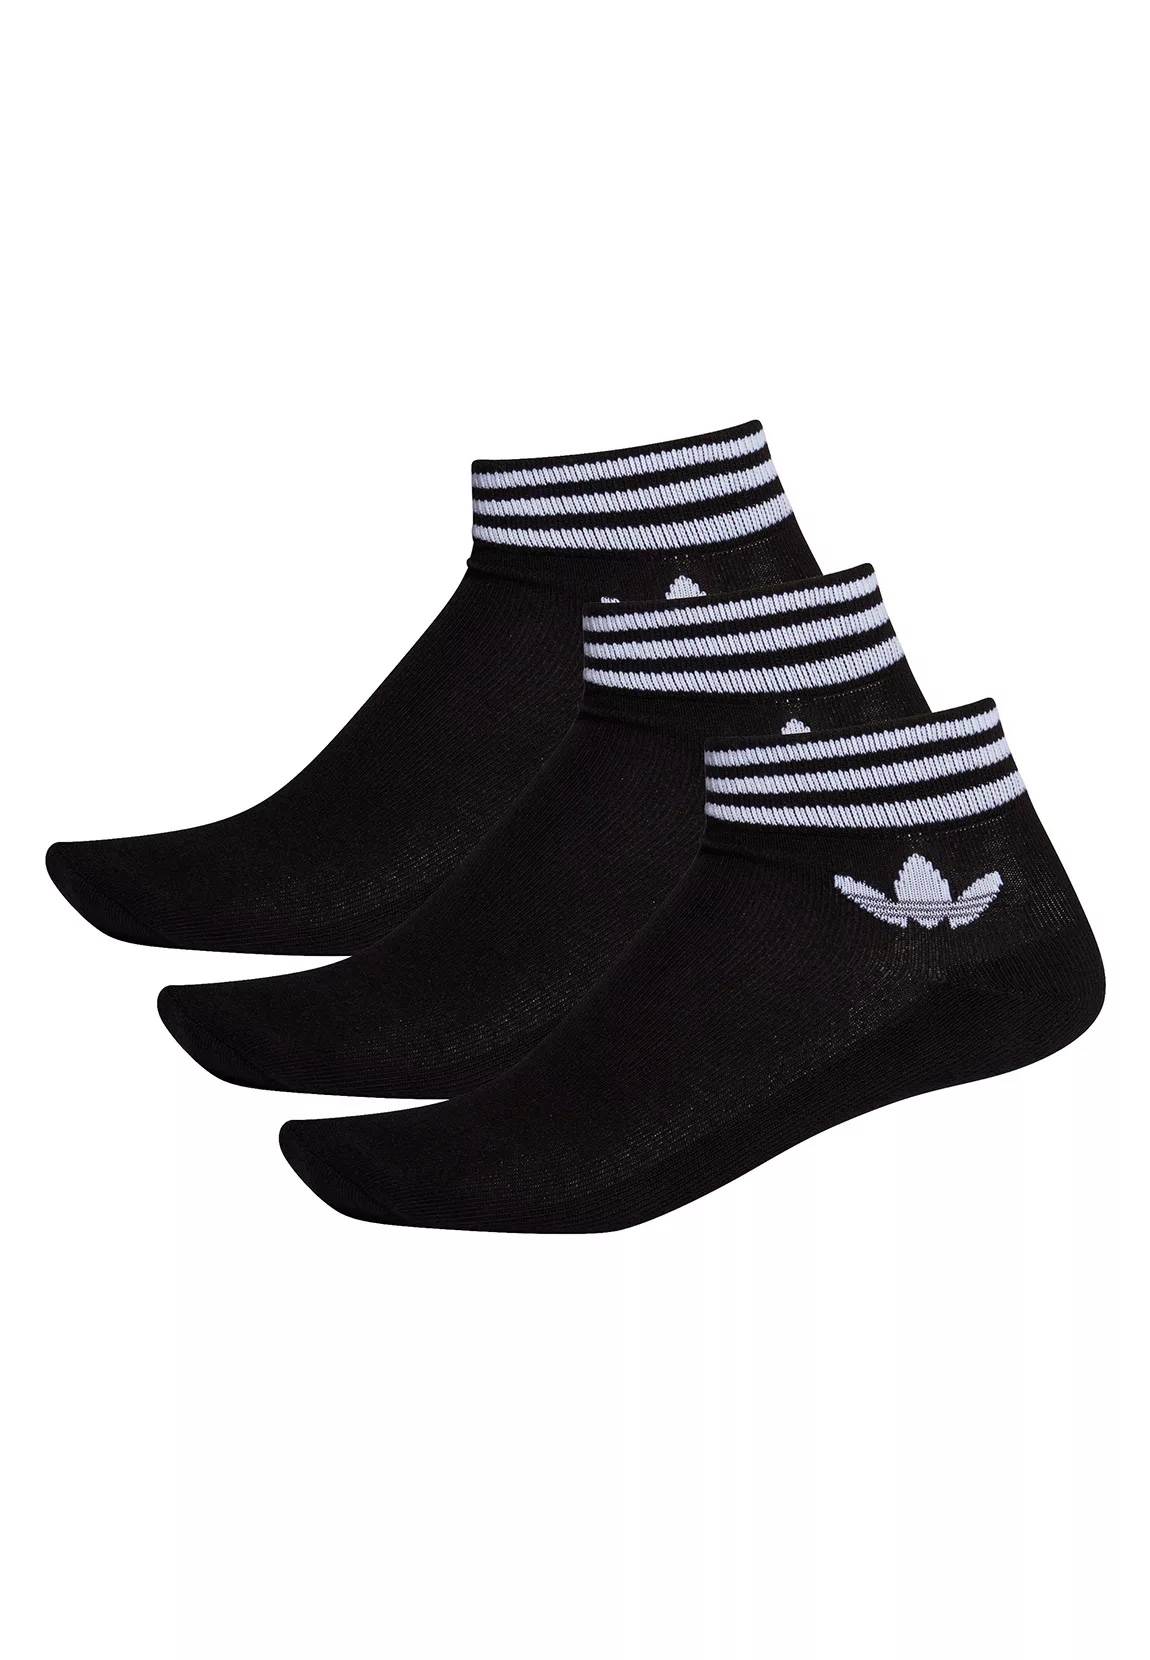 Adidas Originals Trefoil Knöchelhalbe Kissensocken 3 Paare EU 27-30 Black / günstig online kaufen